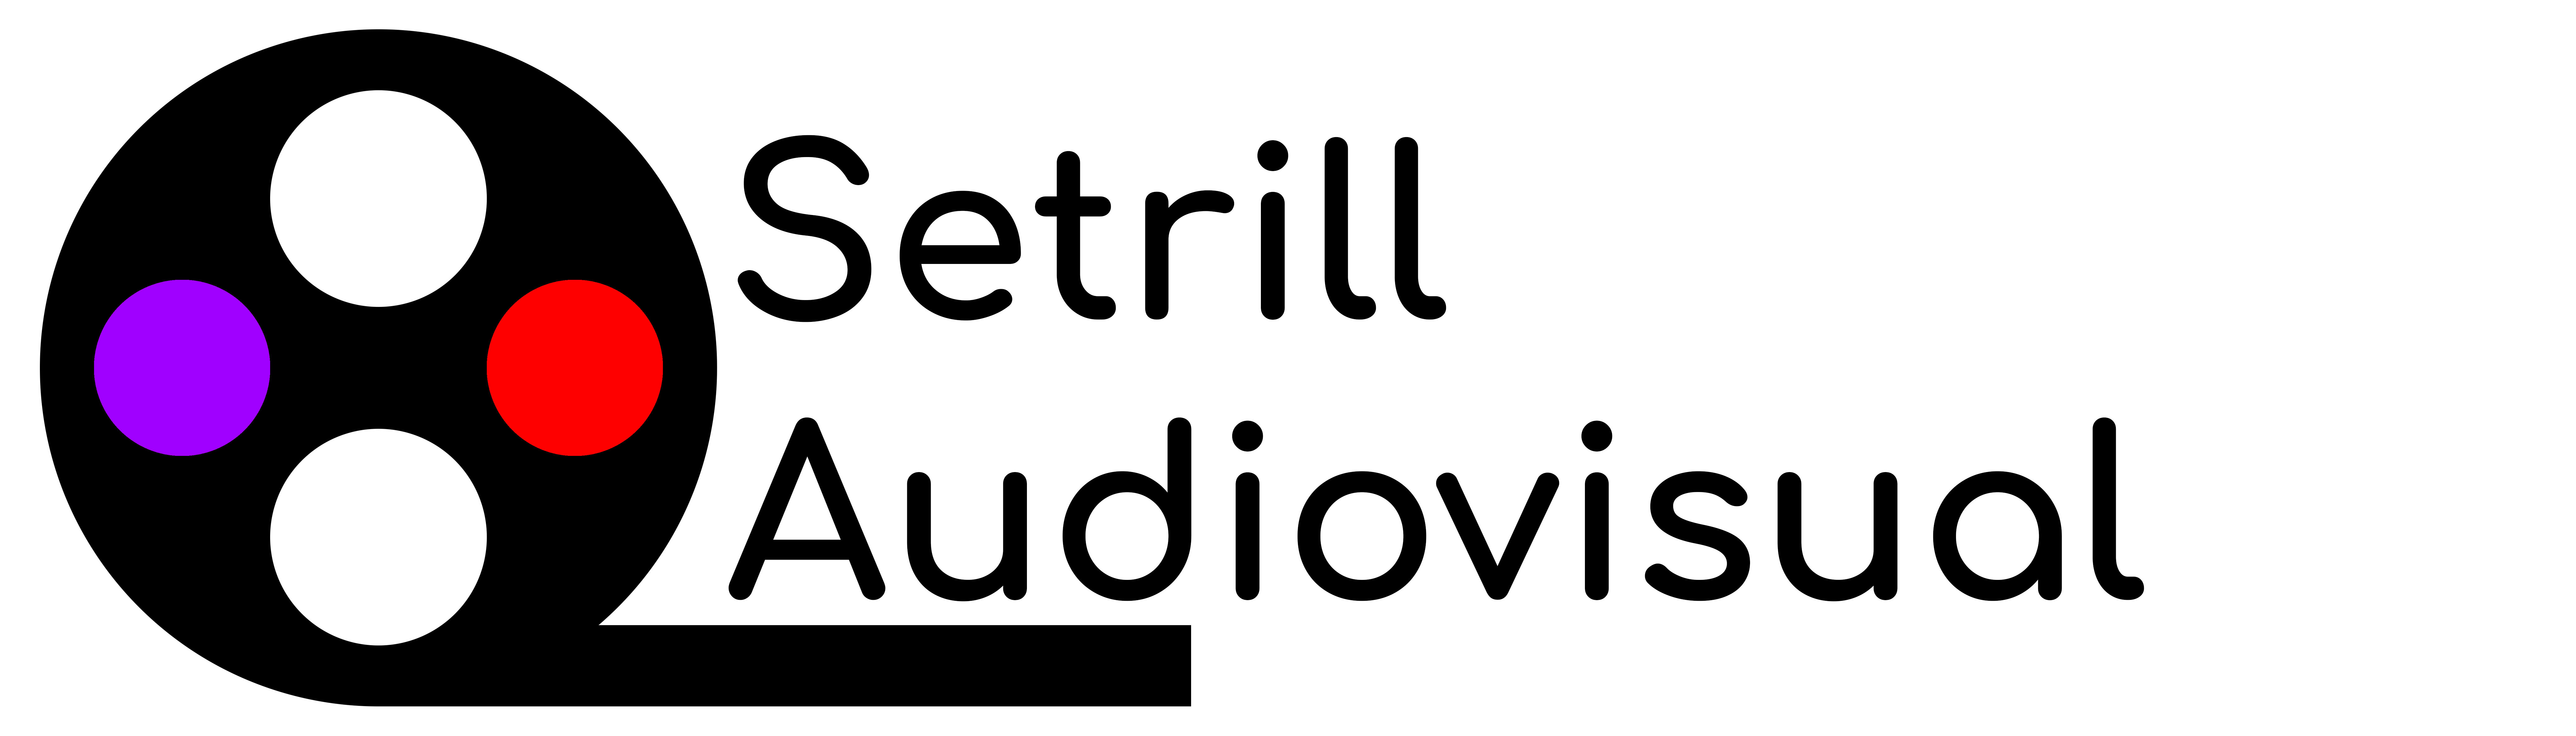 Setrill Audiovisual